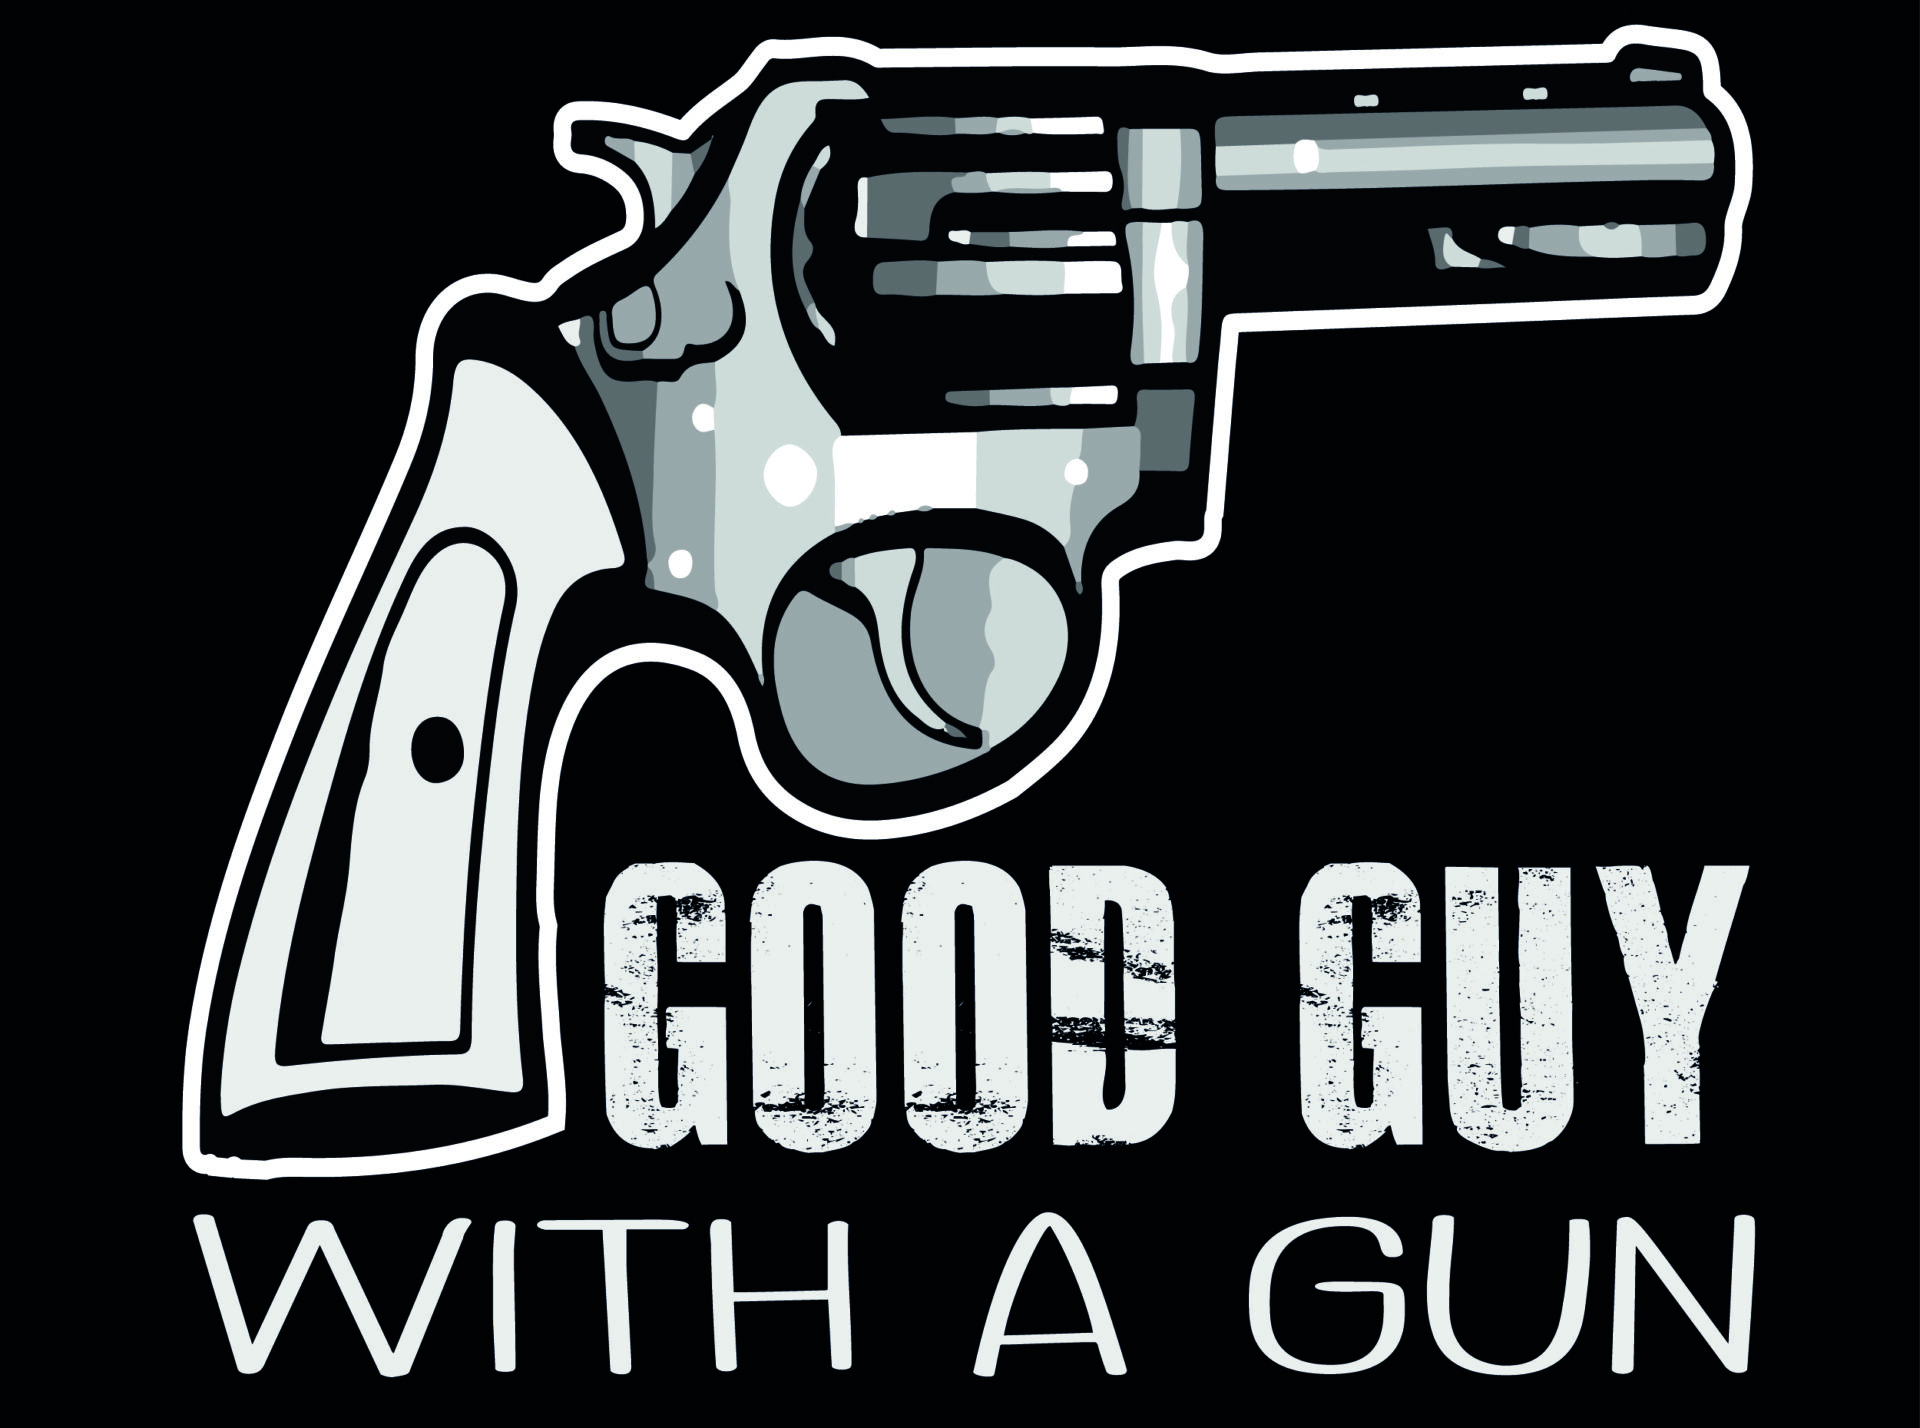 Gun videos. Be Gun.